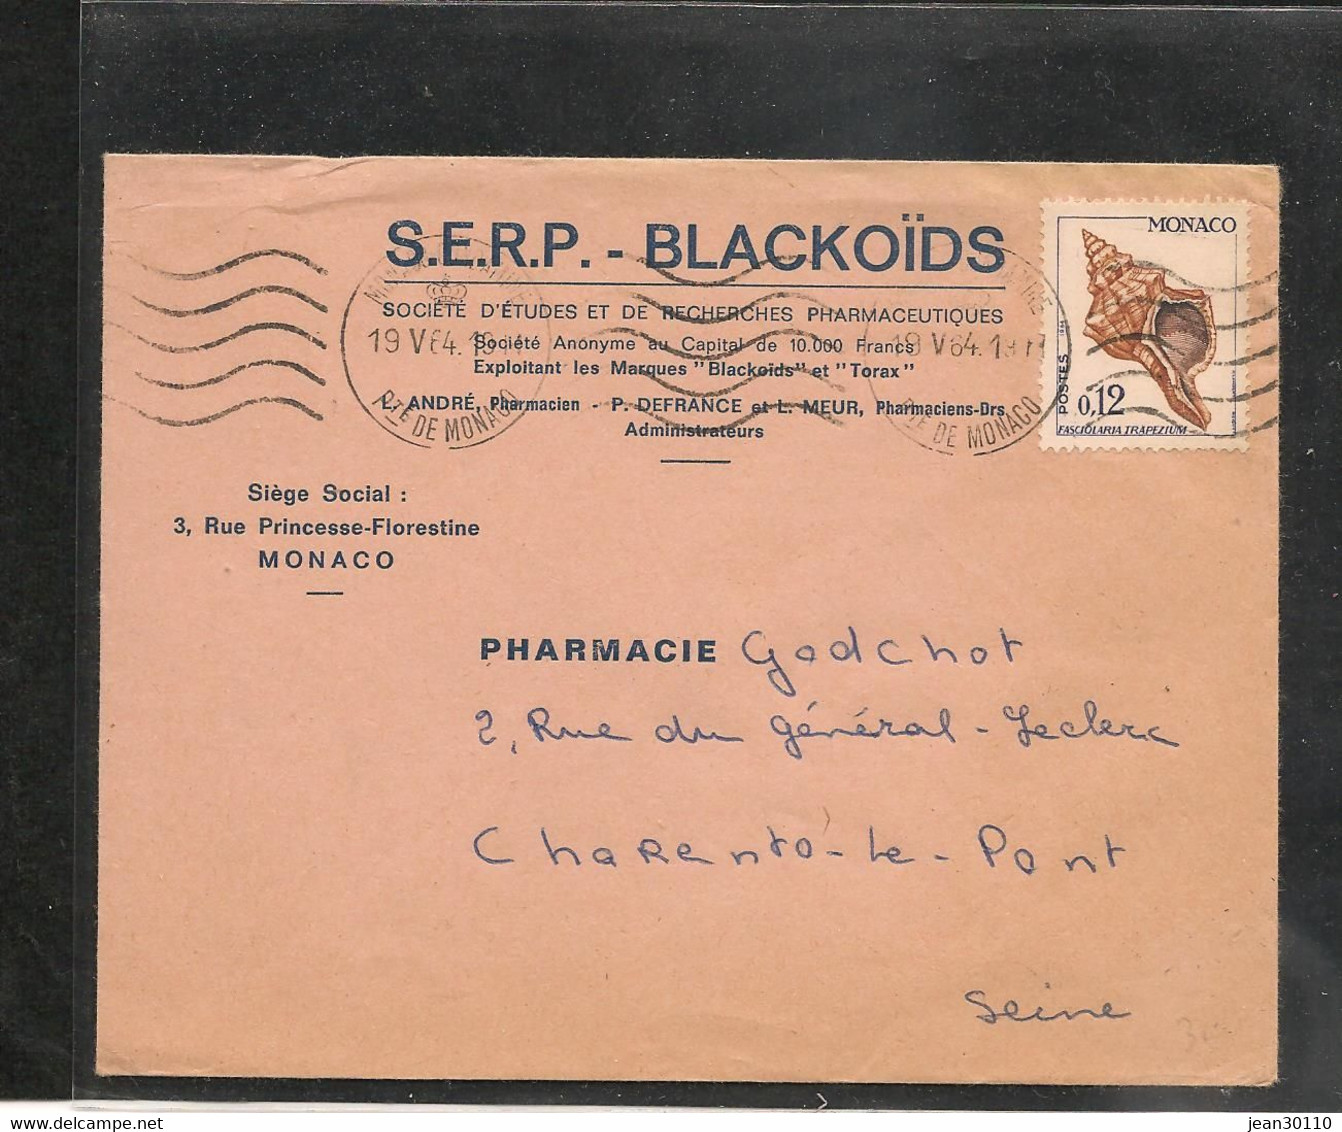 1964 ENVELOPPE S.E.R.P.  DE MONACO POUR CHARENTE LEPONT - Storia Postale